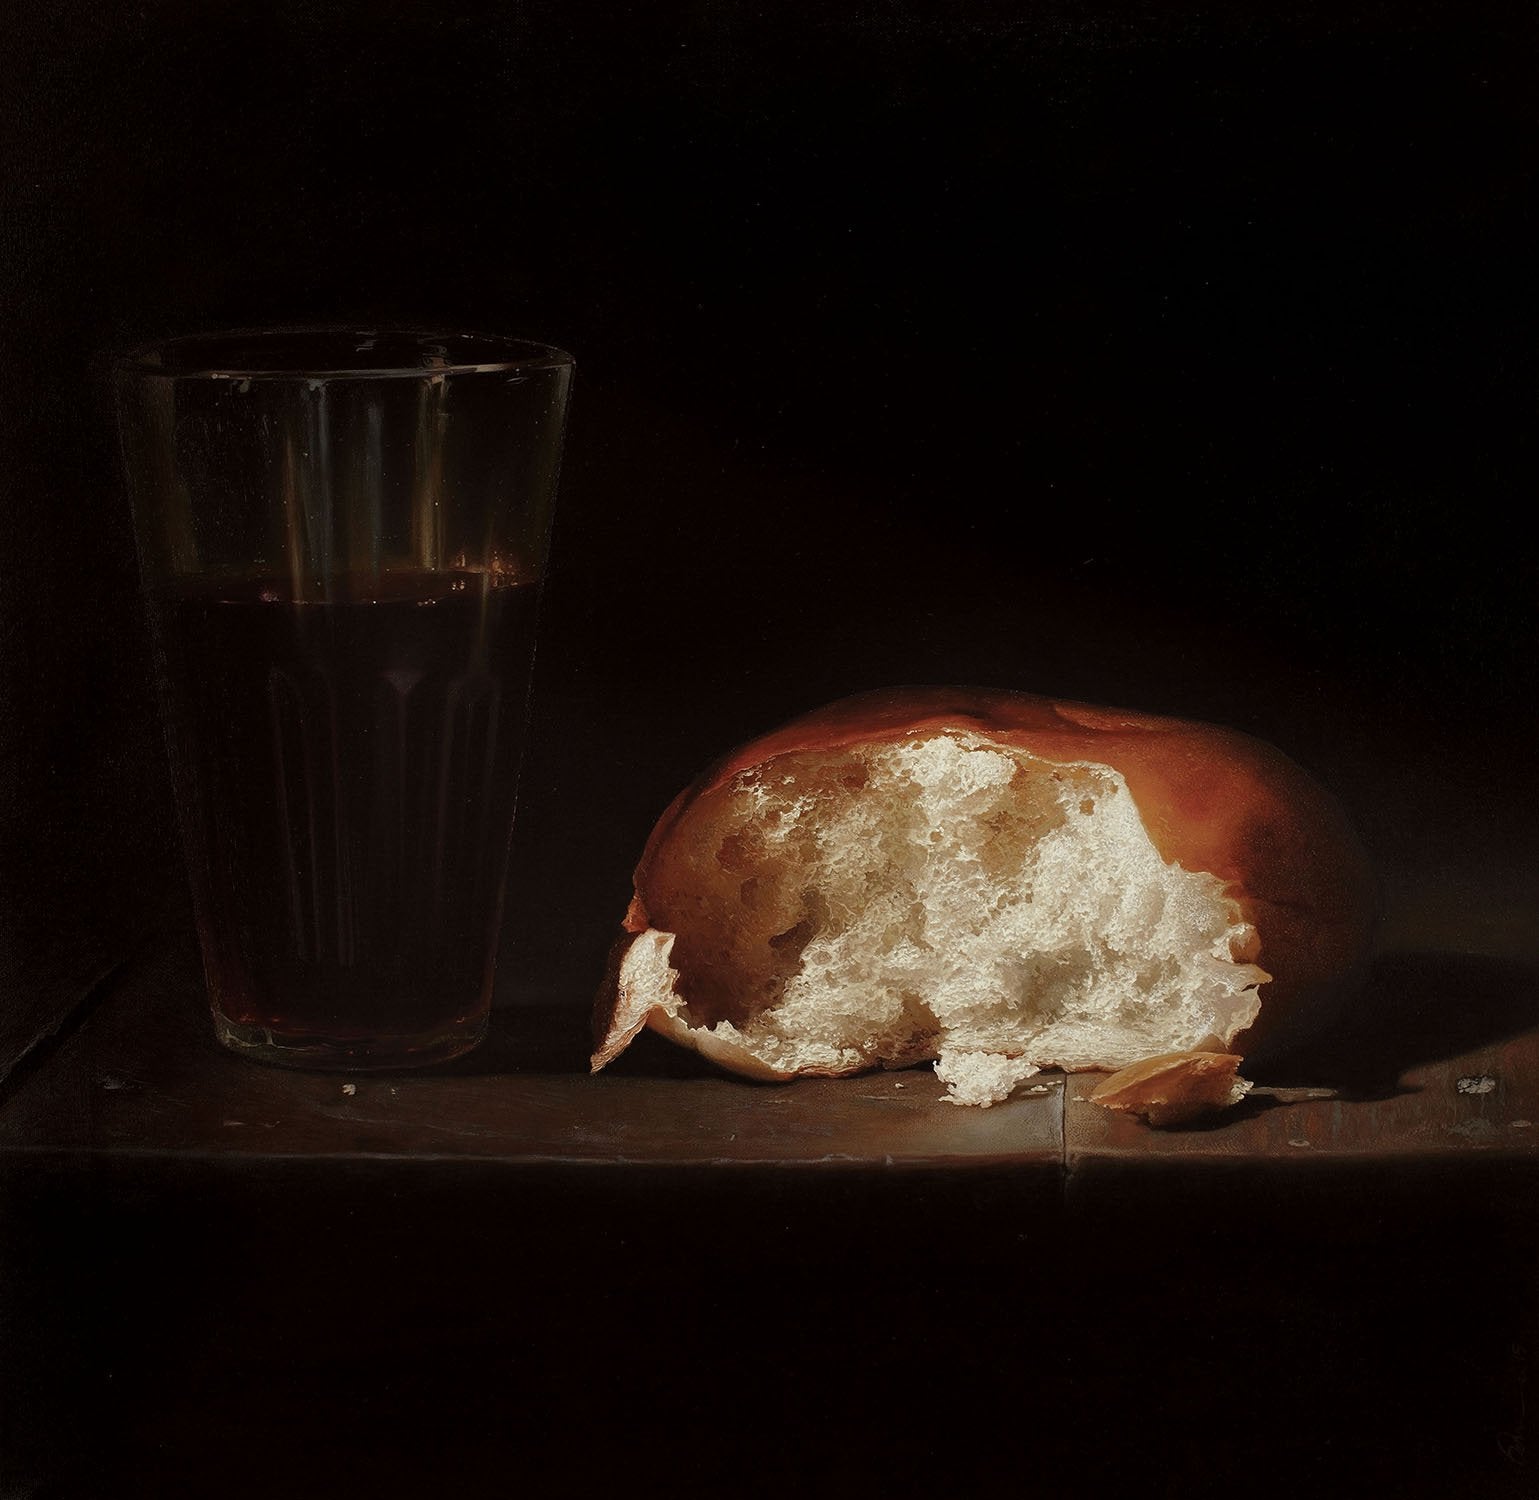 Still Life 1|B. Venkatesan- Oil on Canvas, 2014, 24 x 24 inches